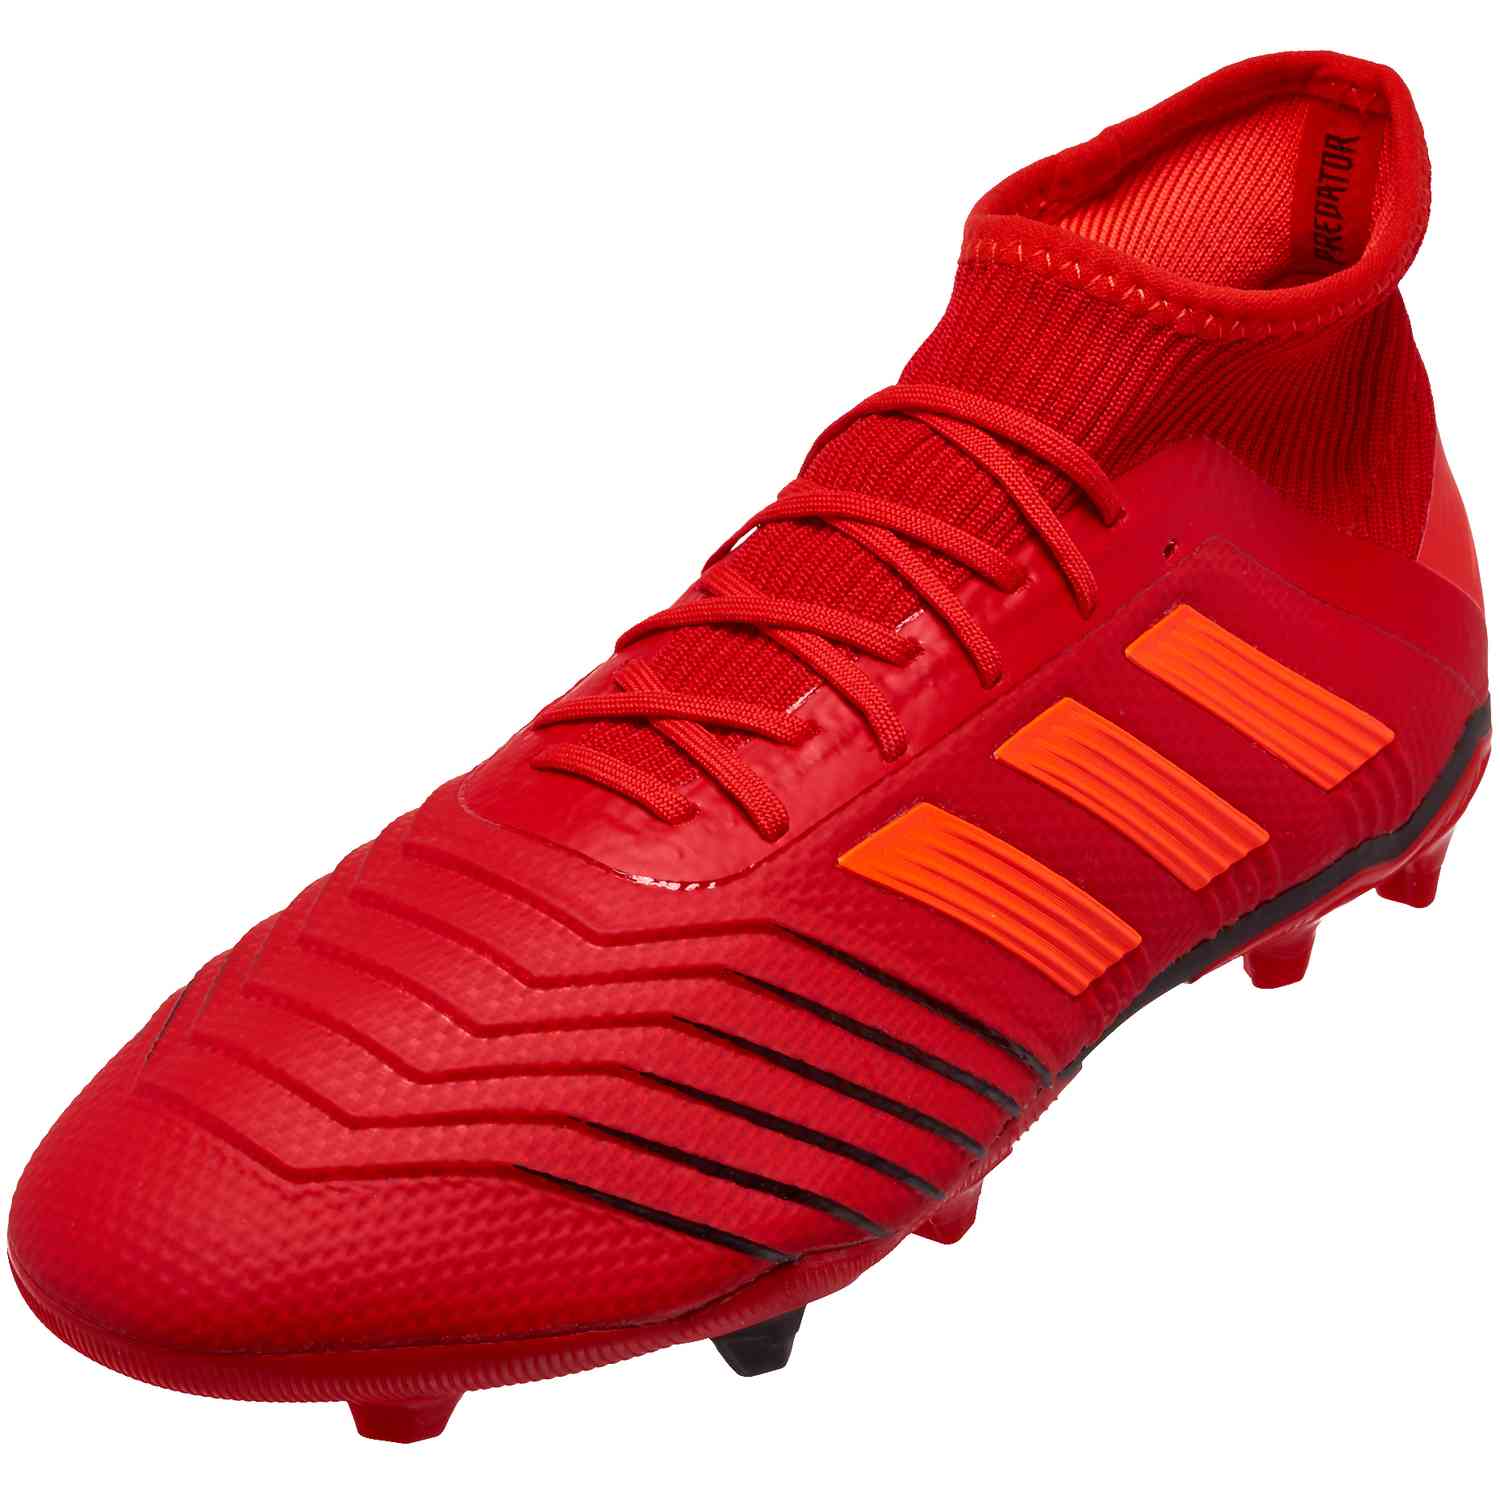 adidas predator 19.1 fg football boots